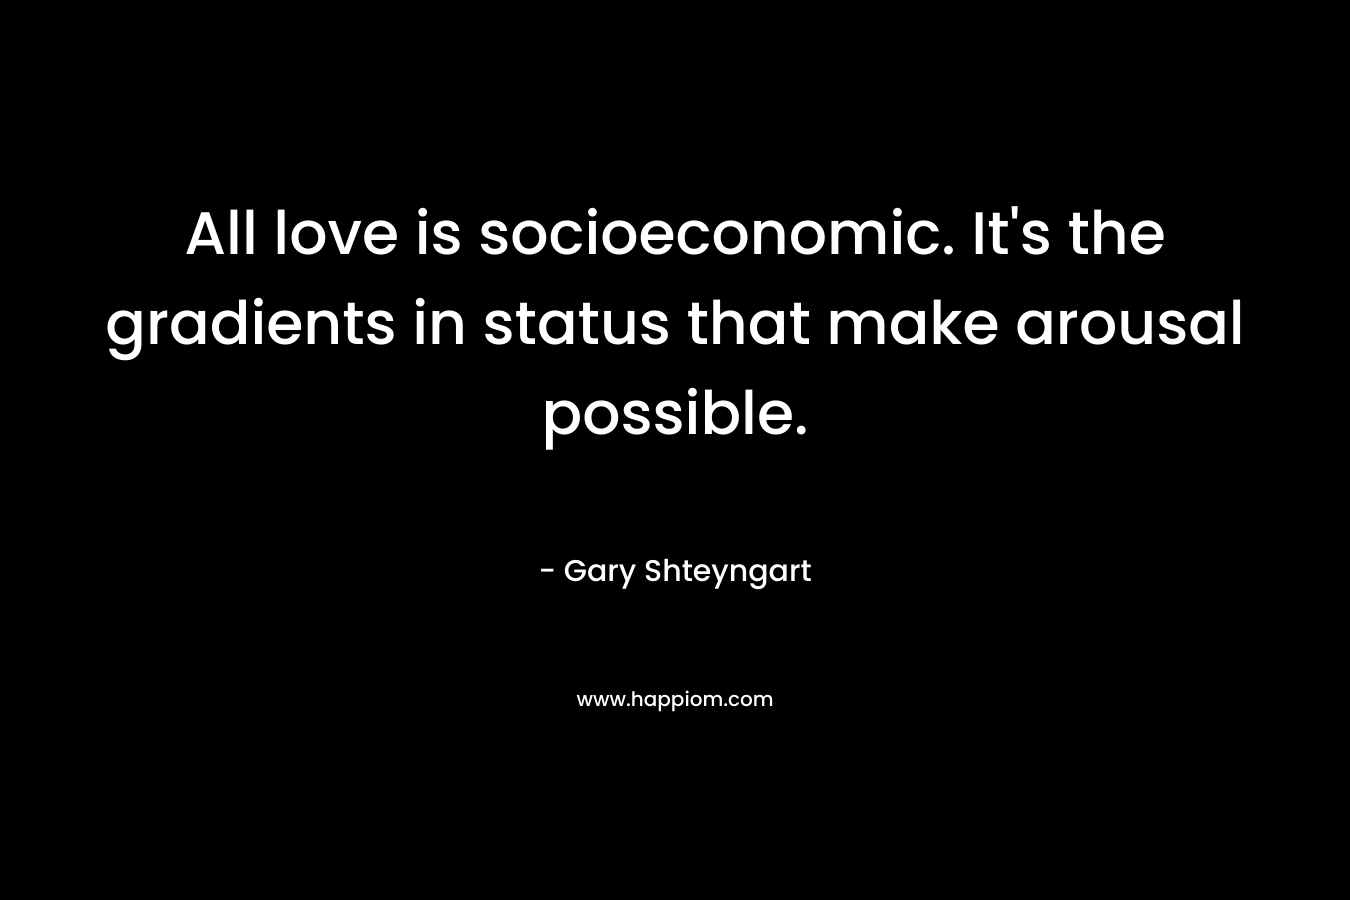 All love is socioeconomic. It’s the gradients in status that make arousal possible. – Gary Shteyngart